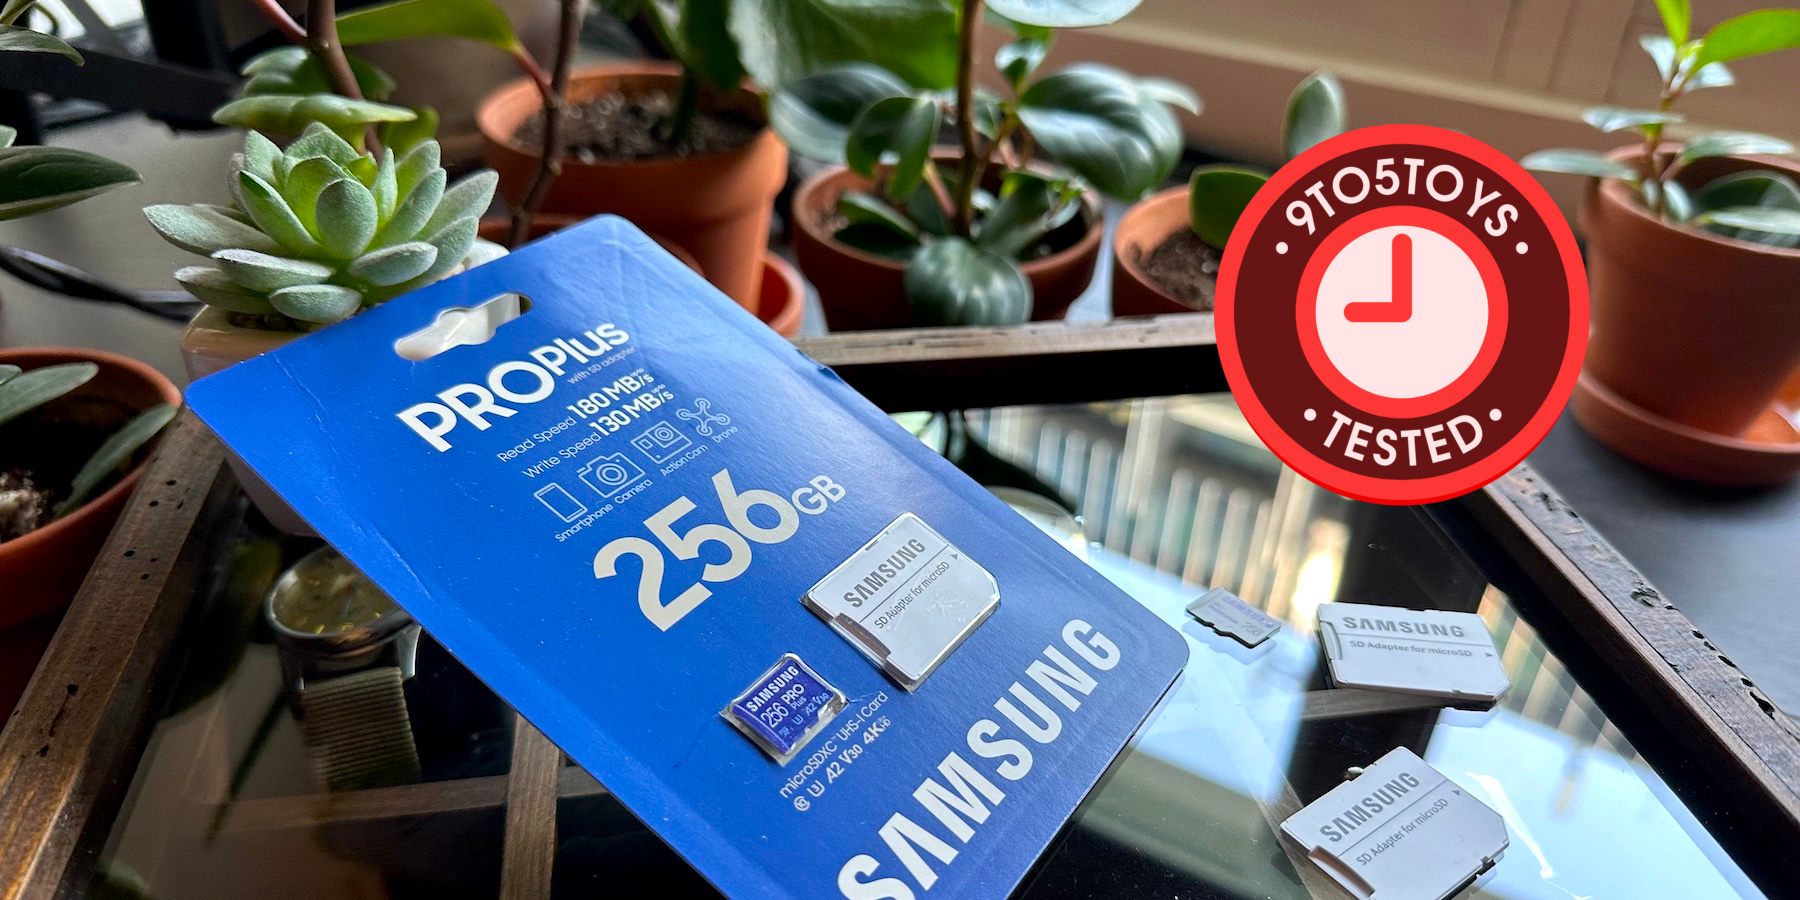 128GB PRO Plus microSDXC Card w/ Reader